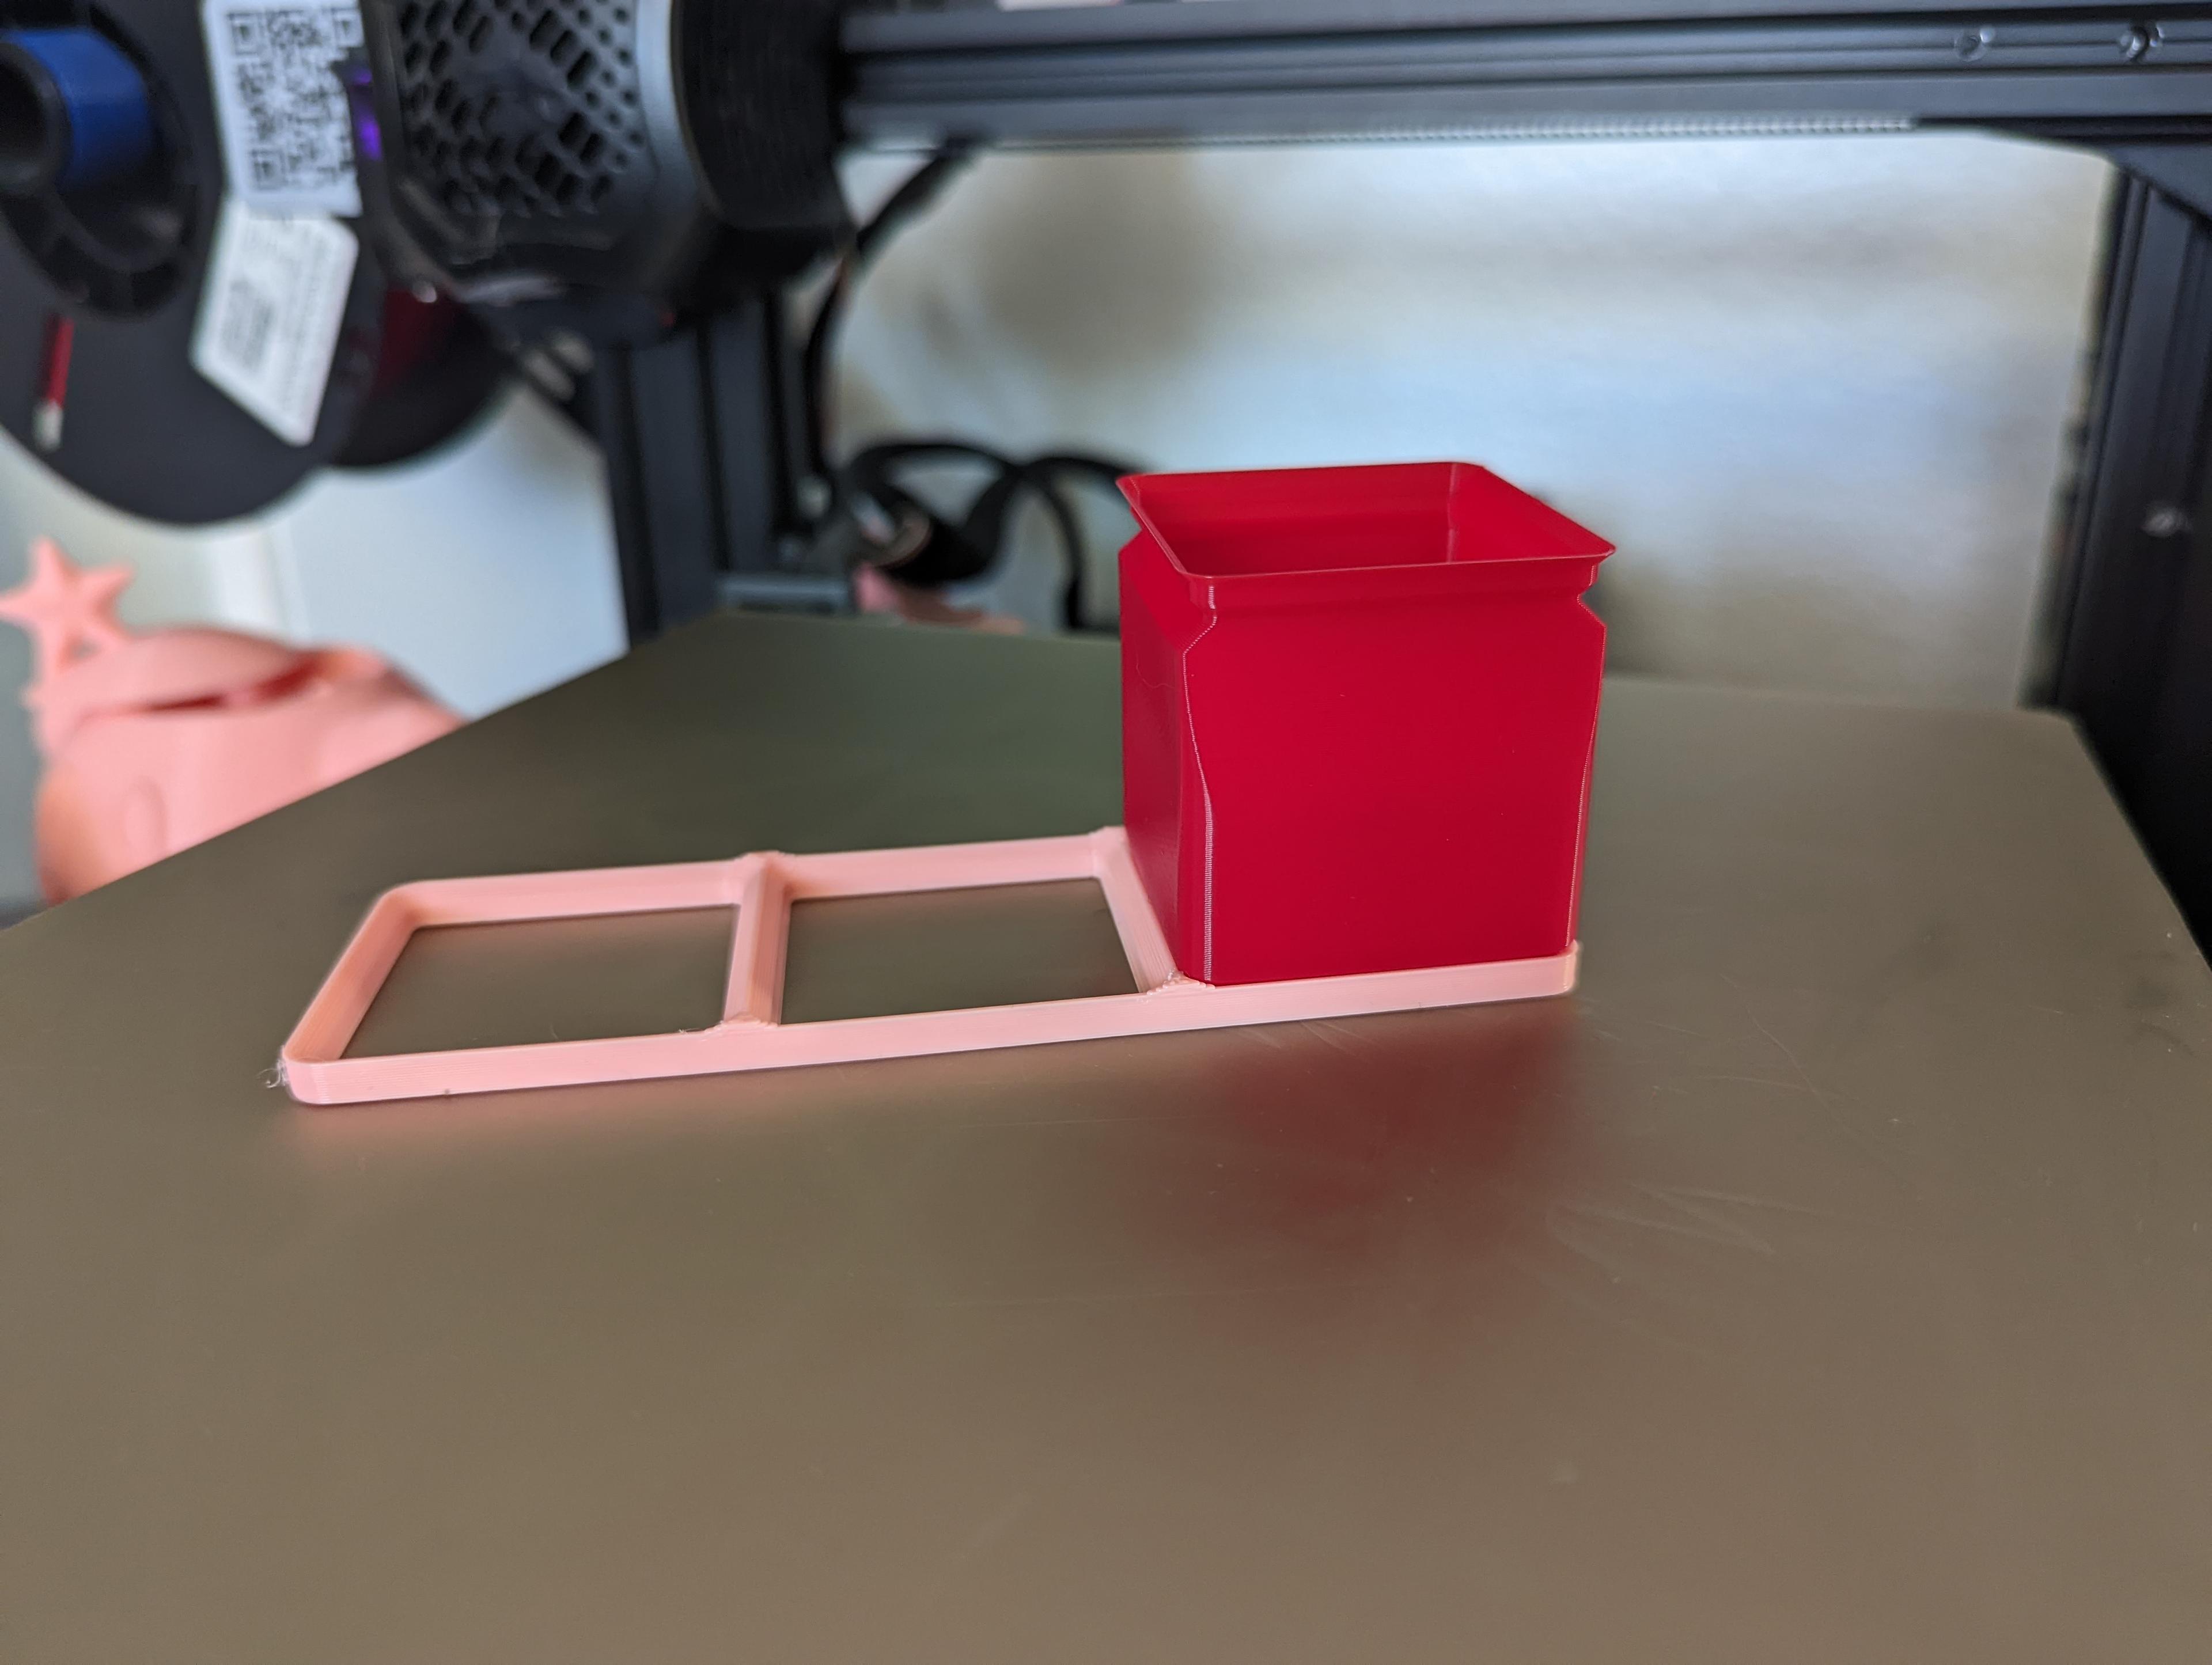 #gridfinity Vase Mode Single Box 3d model